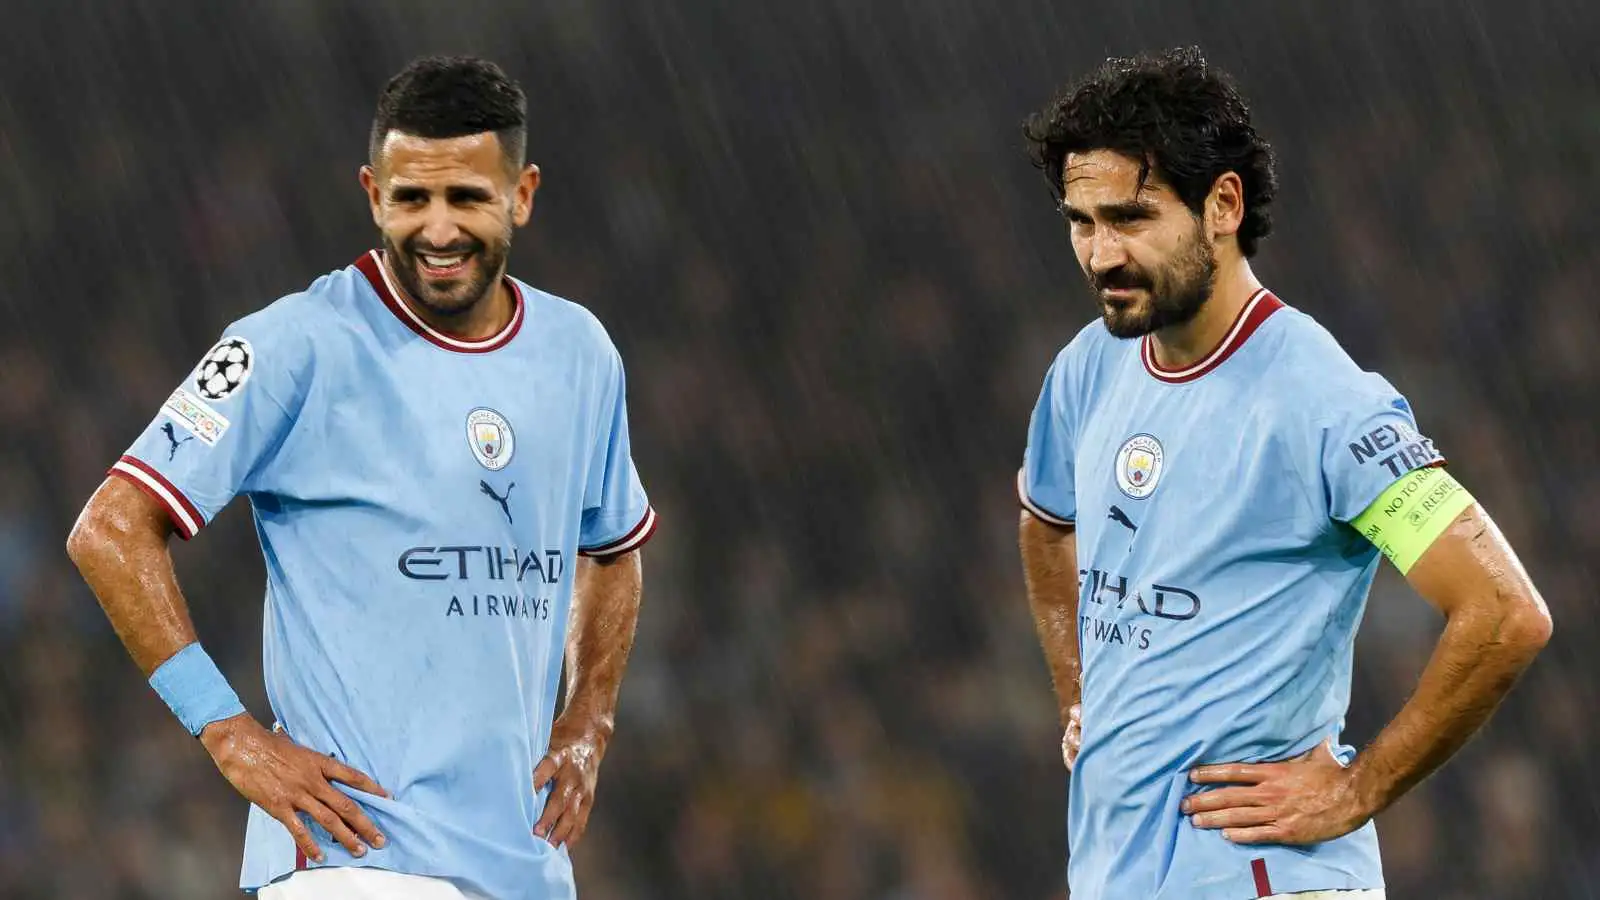 Riyad Mahrez and Ilkay Gundogan representing Manchester City